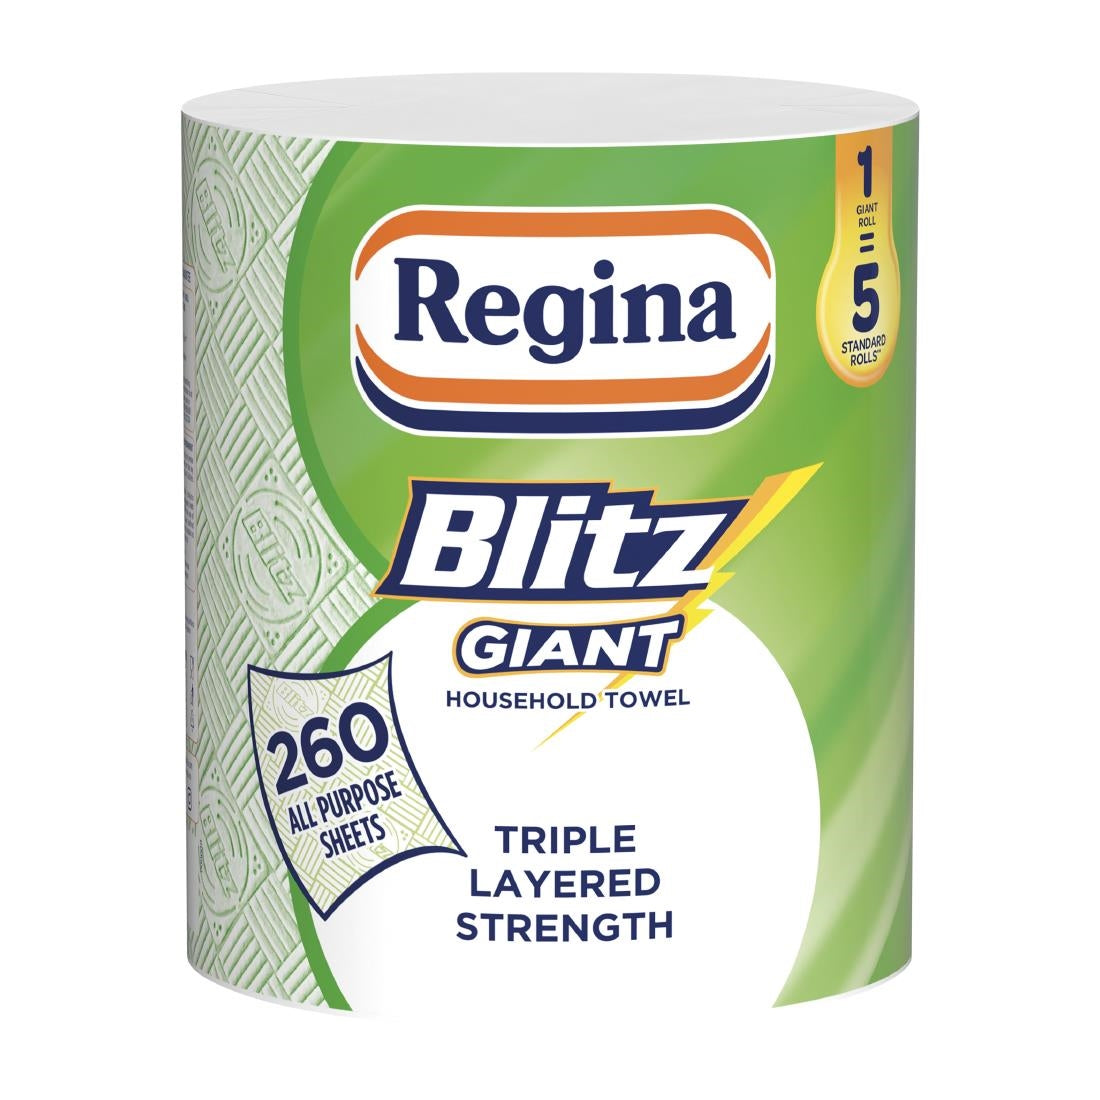 FU297 Regina Blitz Giant All Purpose Kitchen Roll 3Ply (Pack of 6x1 Rolls)